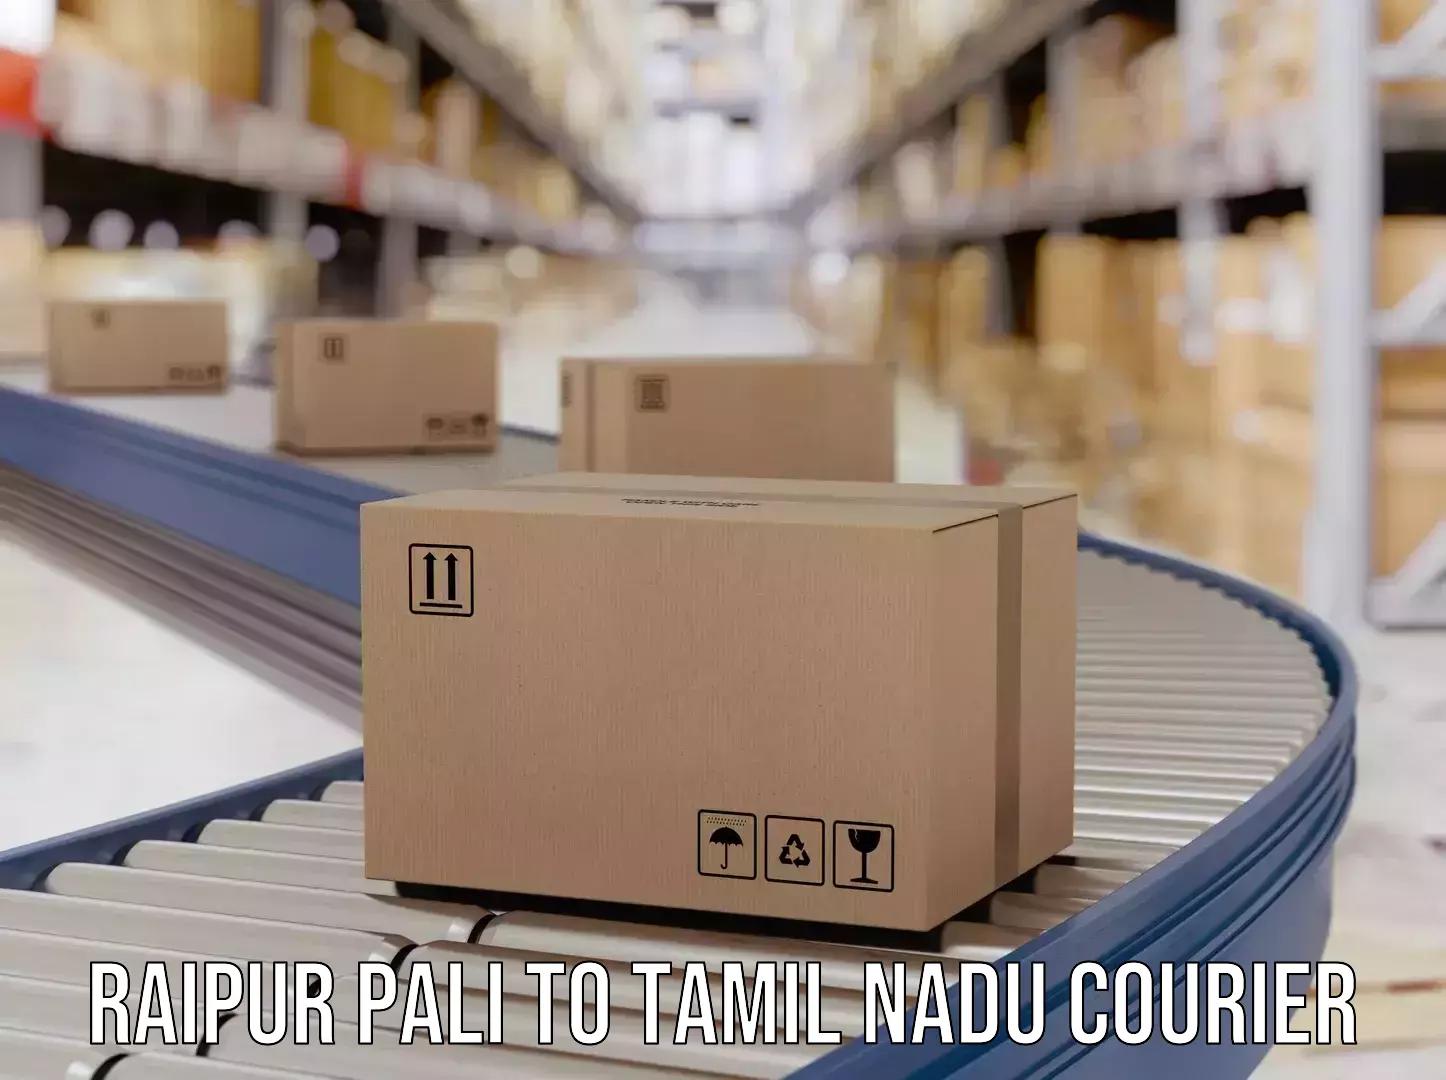 Pharmaceutical courier Raipur Pali to Tamil Nadu